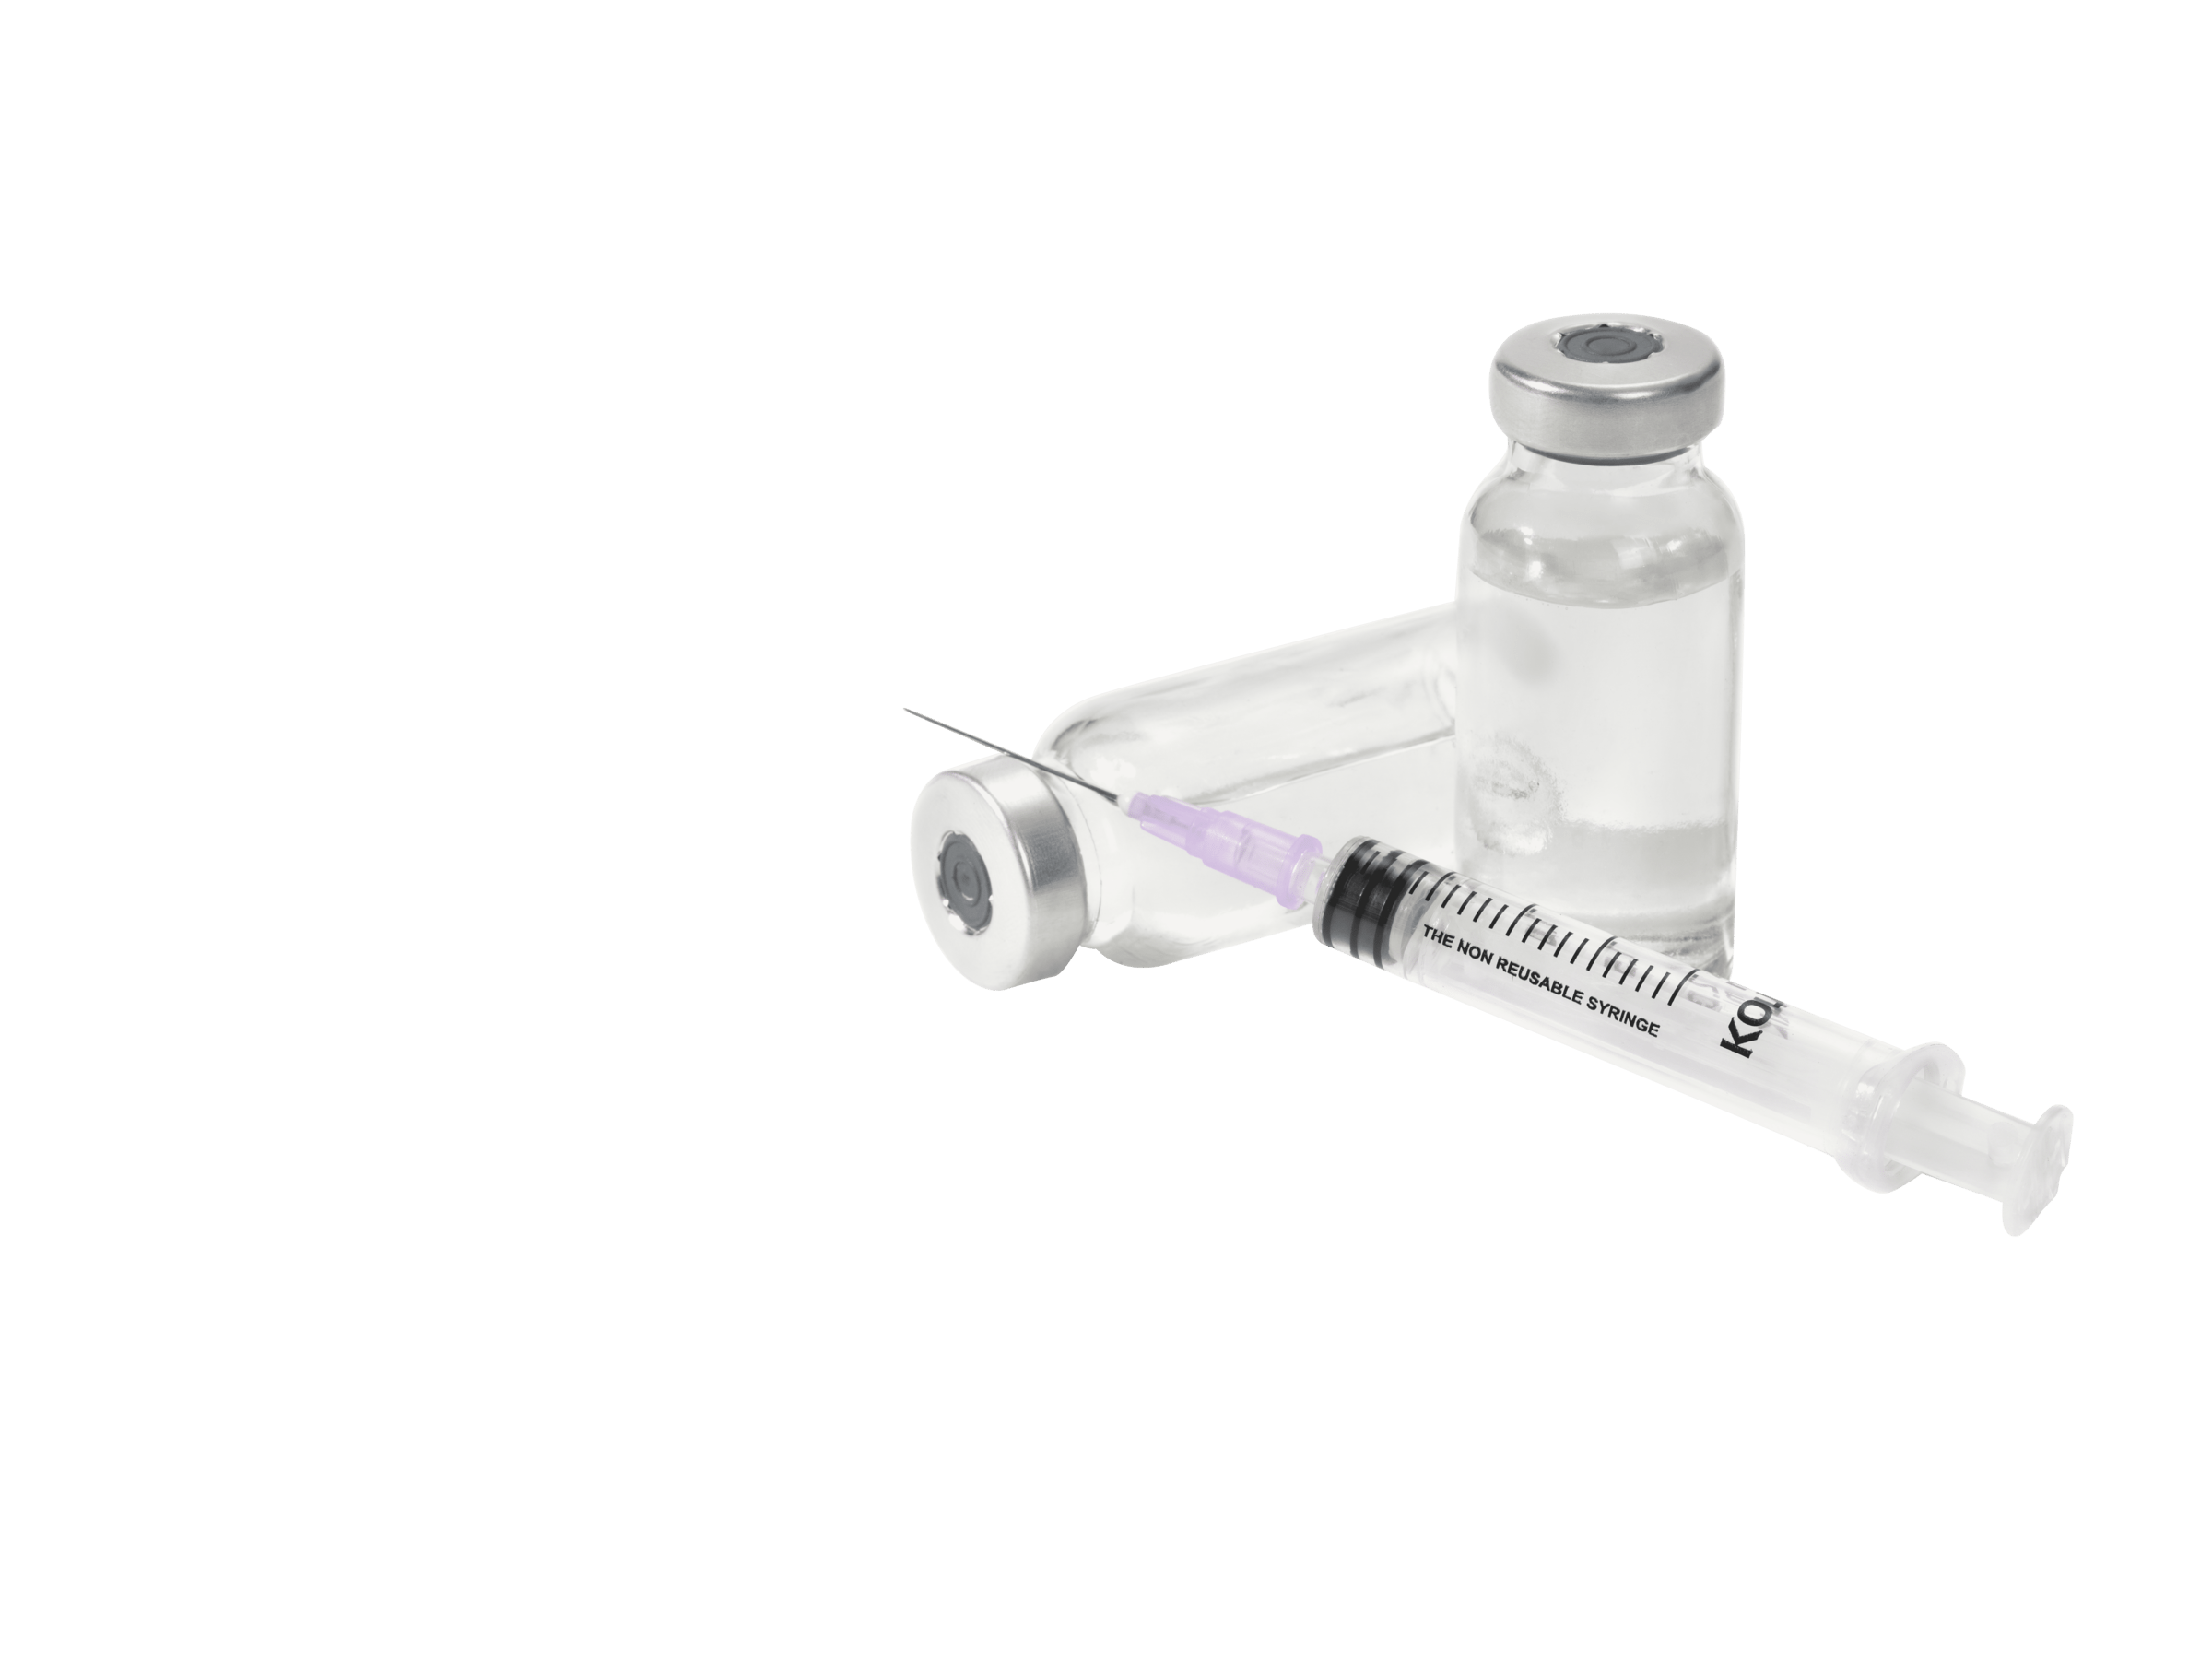 Safe and Sterile Kojak Selinge Auto-Disable Syringes for Medical image pic